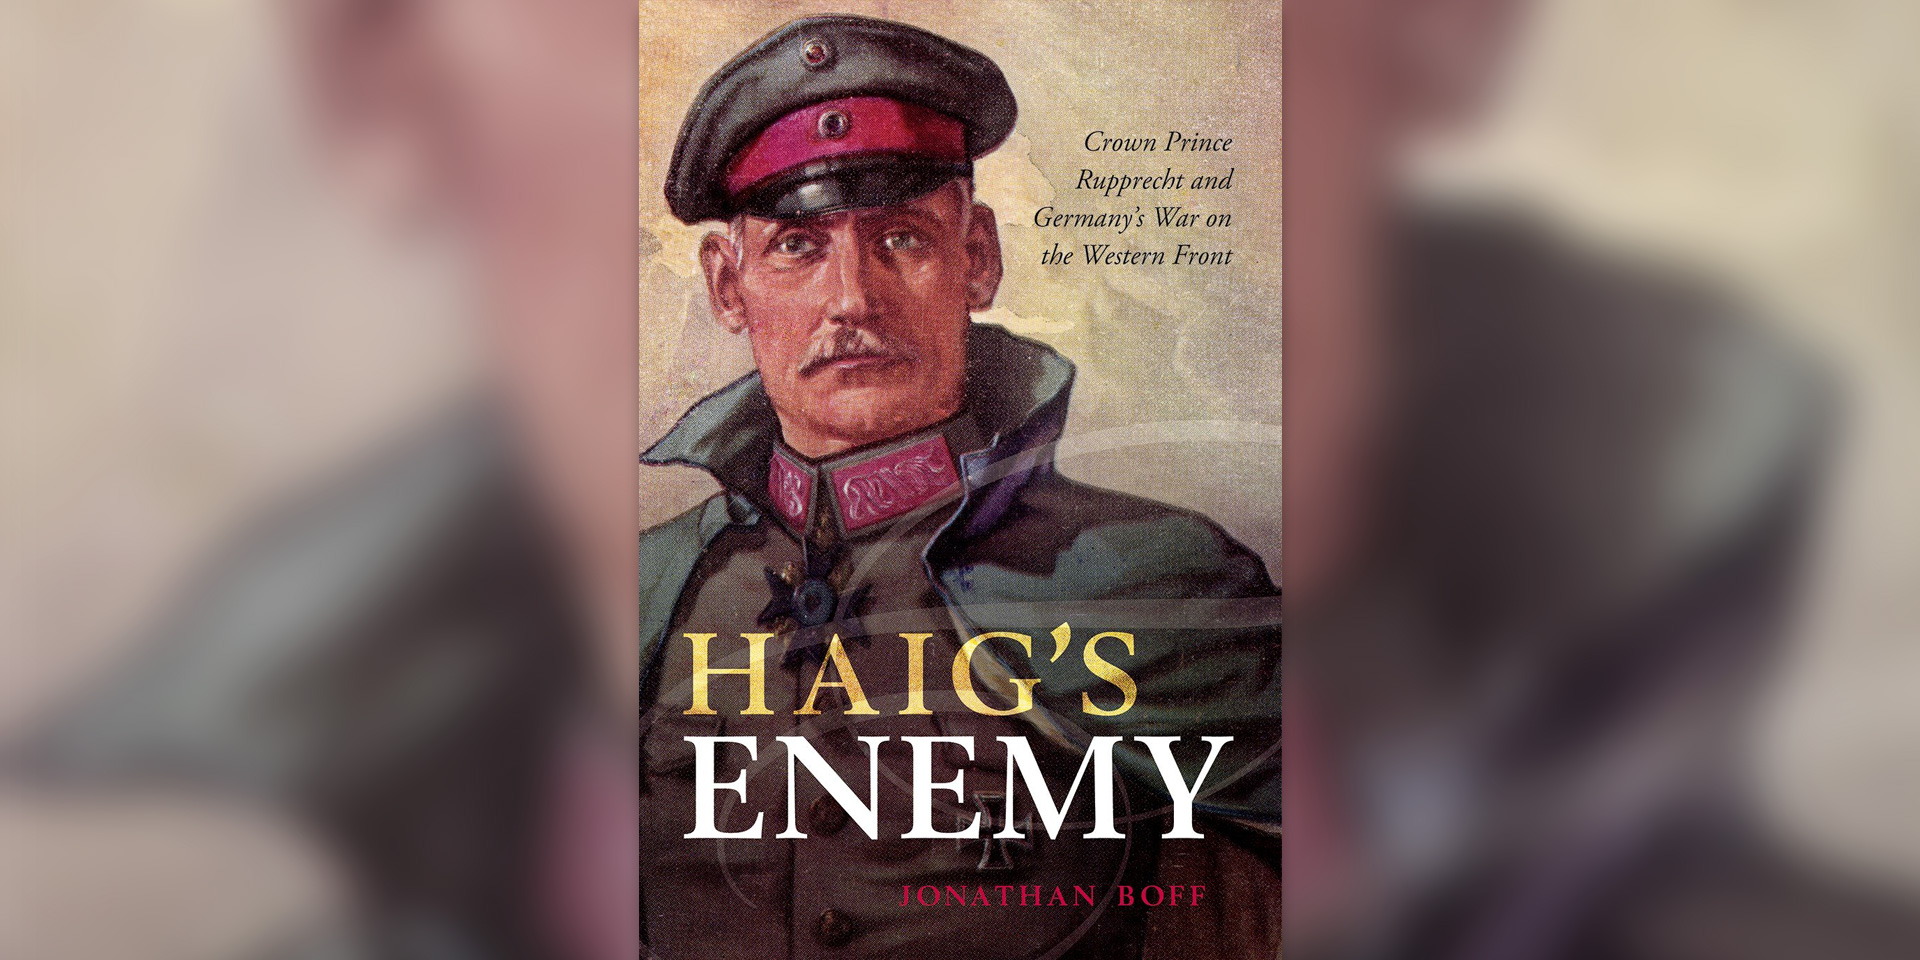 Haig's Enemy book cover